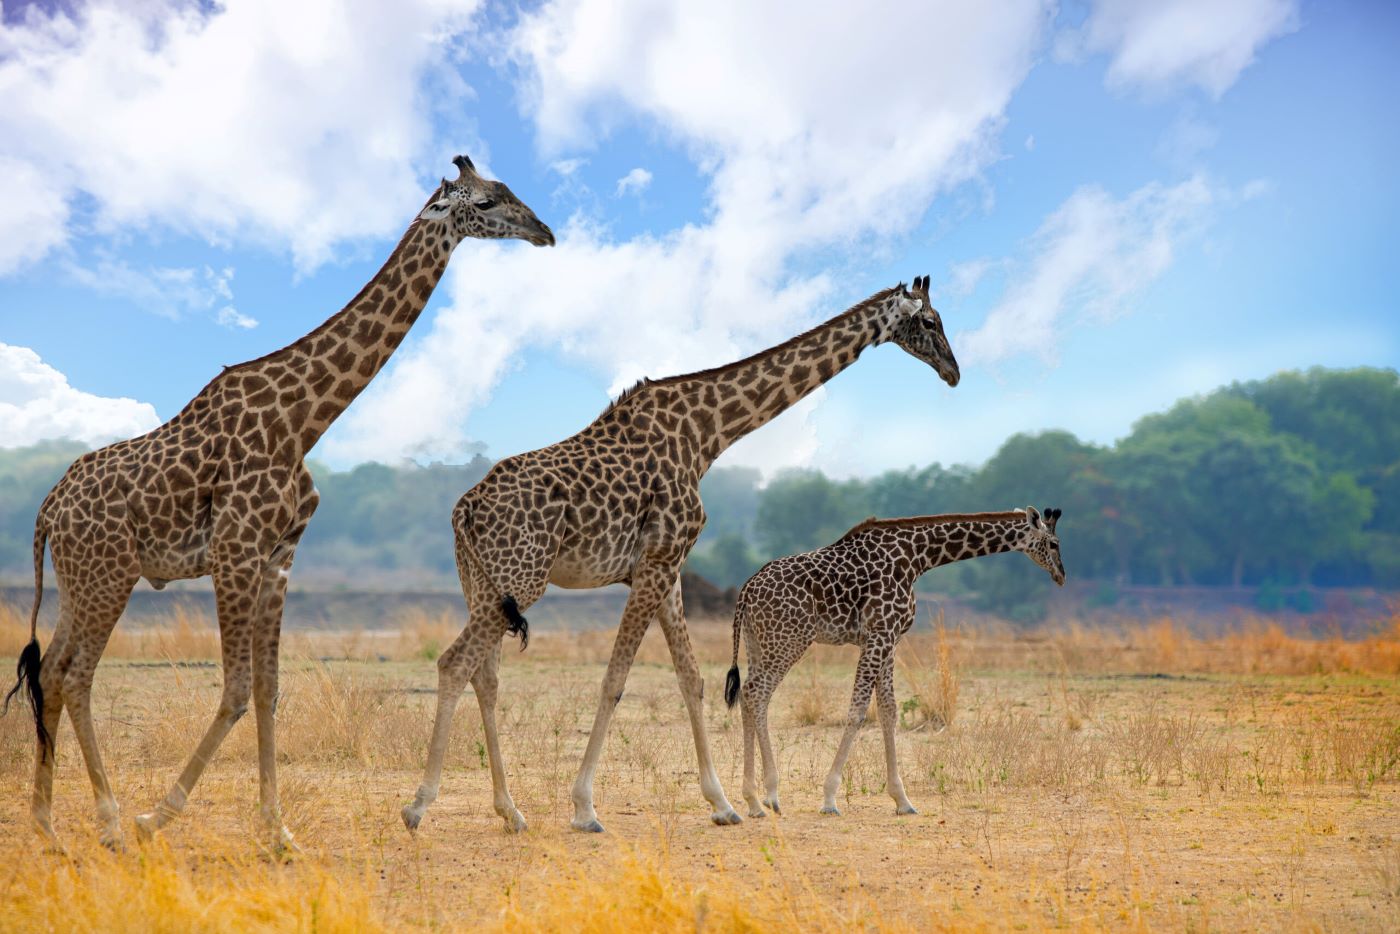 3 giraffes walking